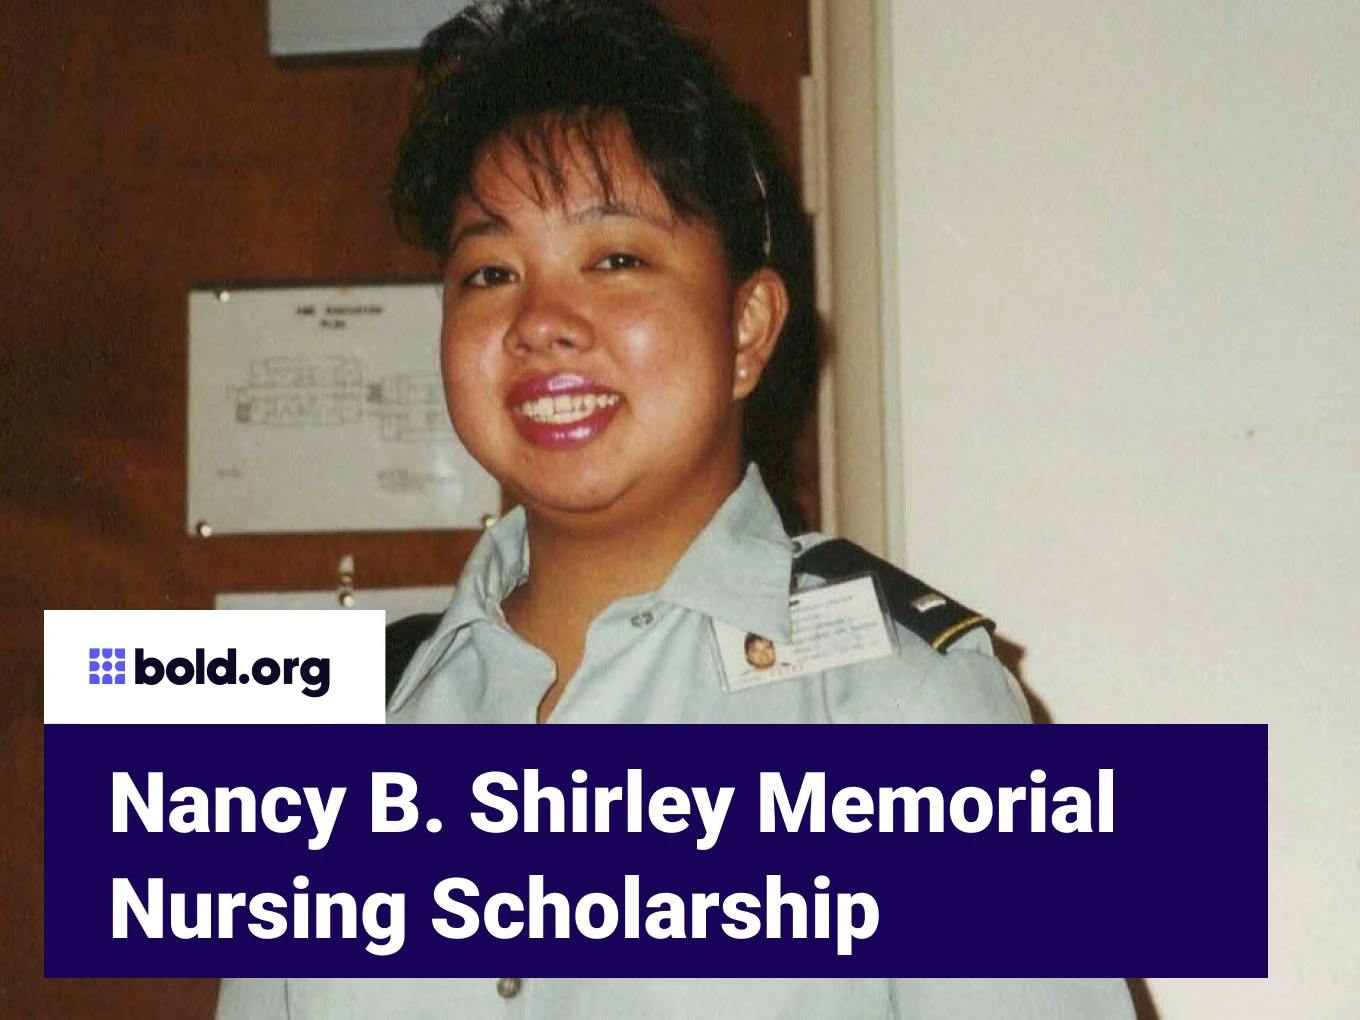 Nancy B. Shirley Memorial Nursing Scholarship